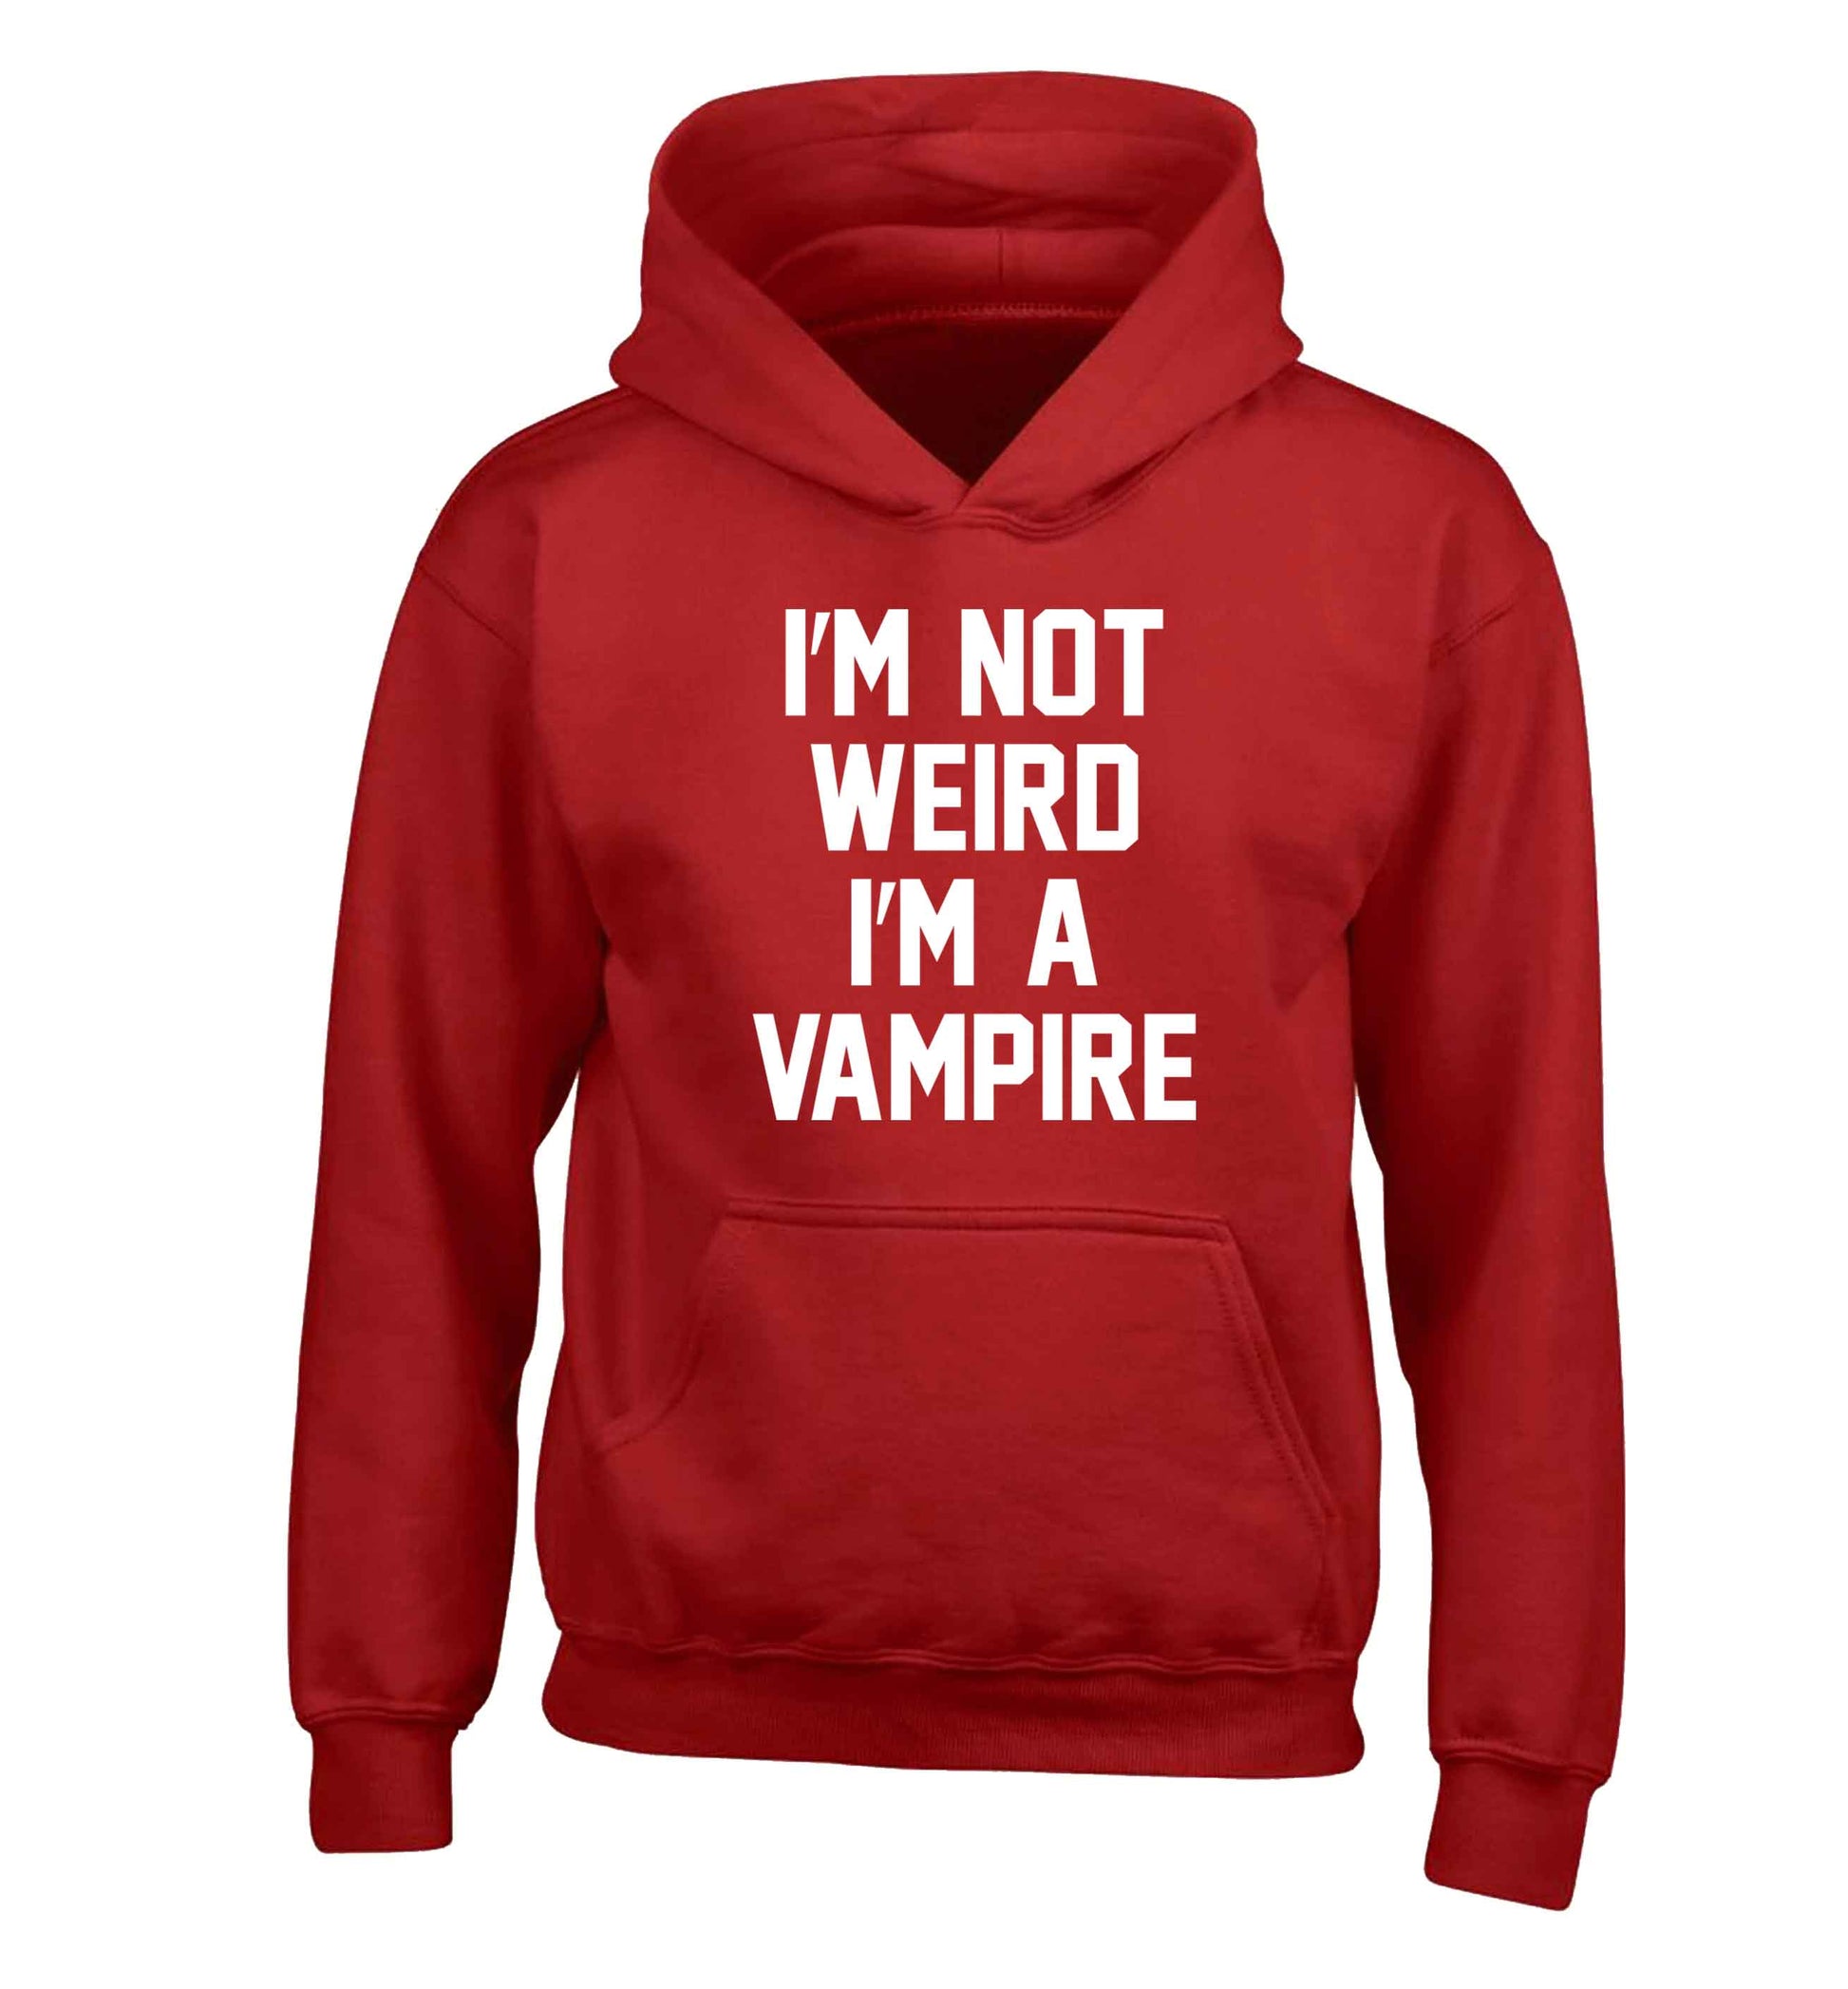 I'm not weird I'm a vampire children's red hoodie 12-13 Years